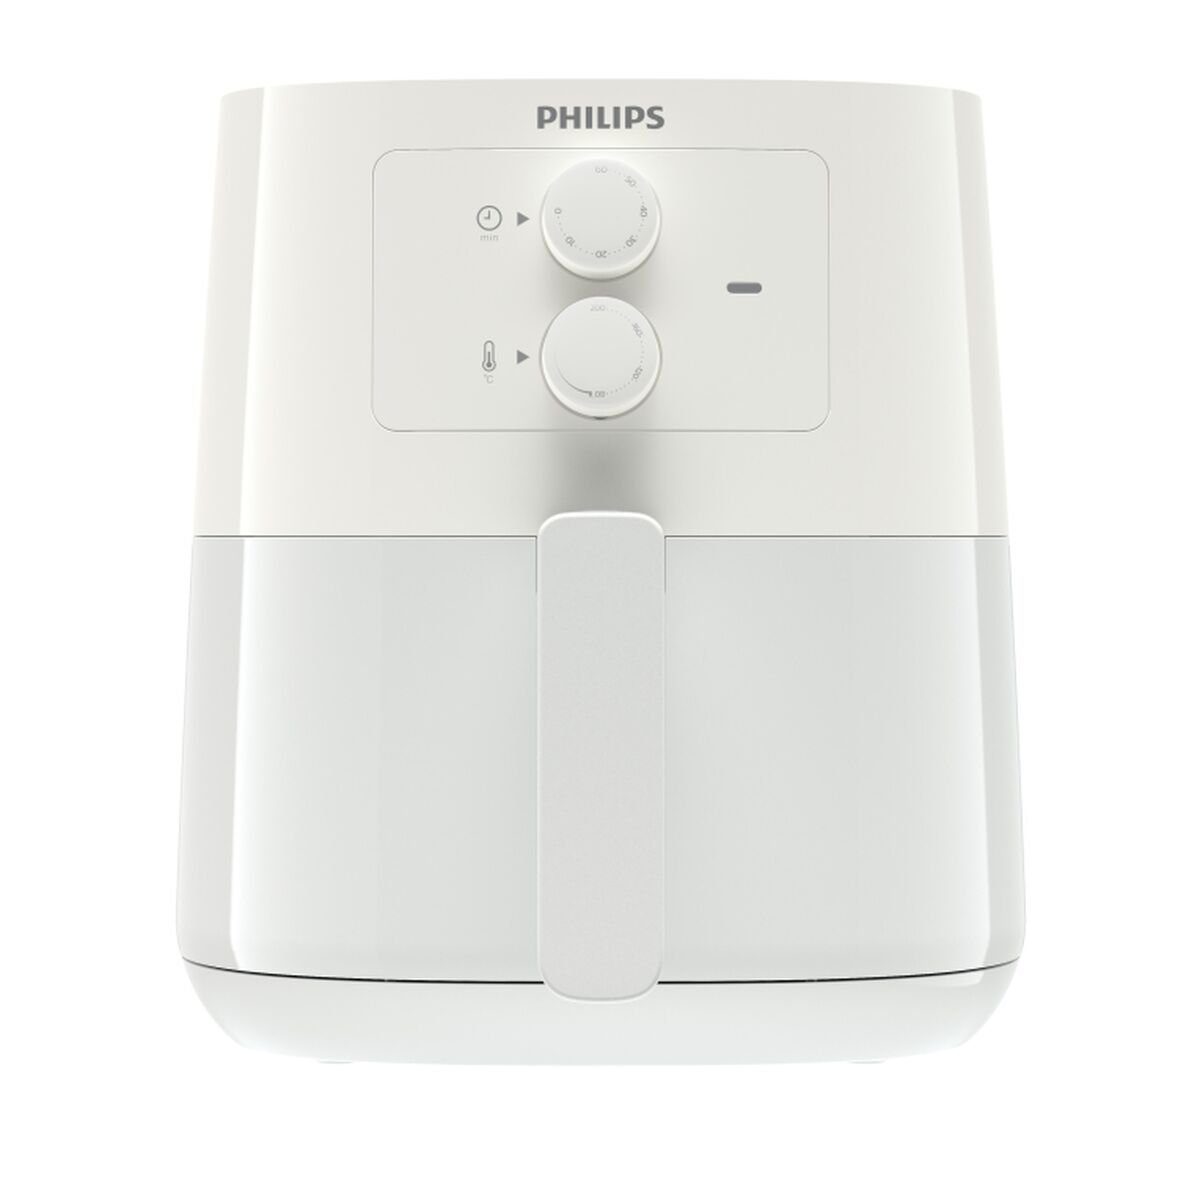 Philips HD920010 W, Weiß 1400 Fritteuse Philips ohne 1400 W Fritteuse WeißGrau Öl